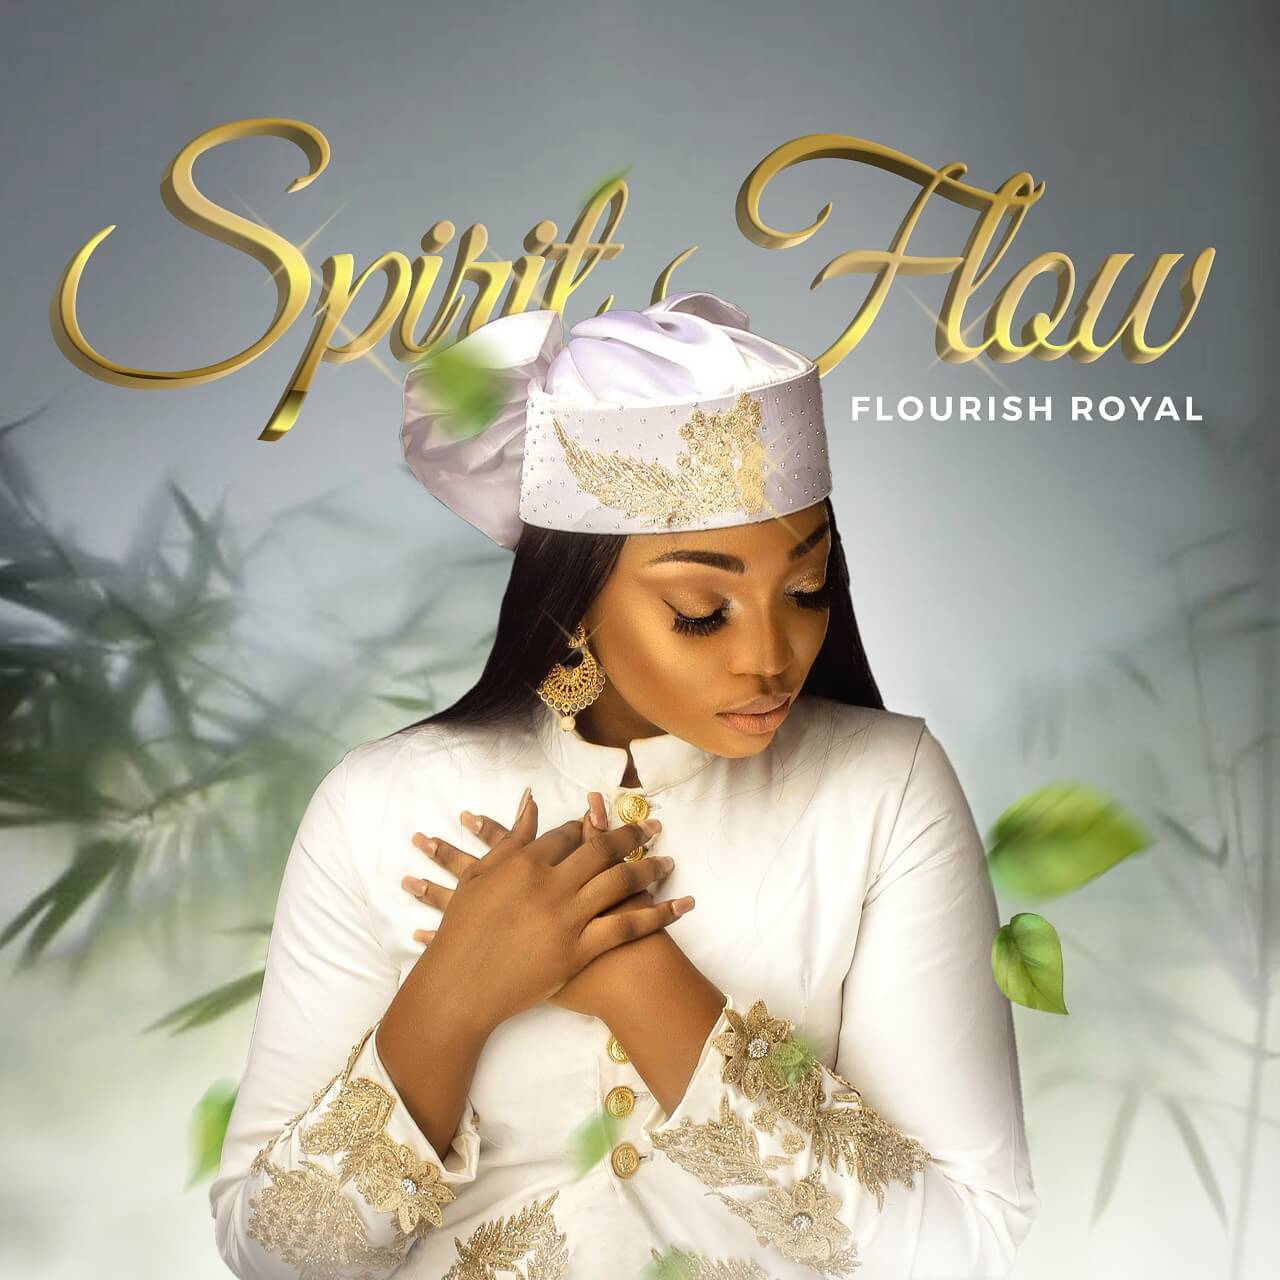 flourish-royal-shares-new-song-”spirit-flow”